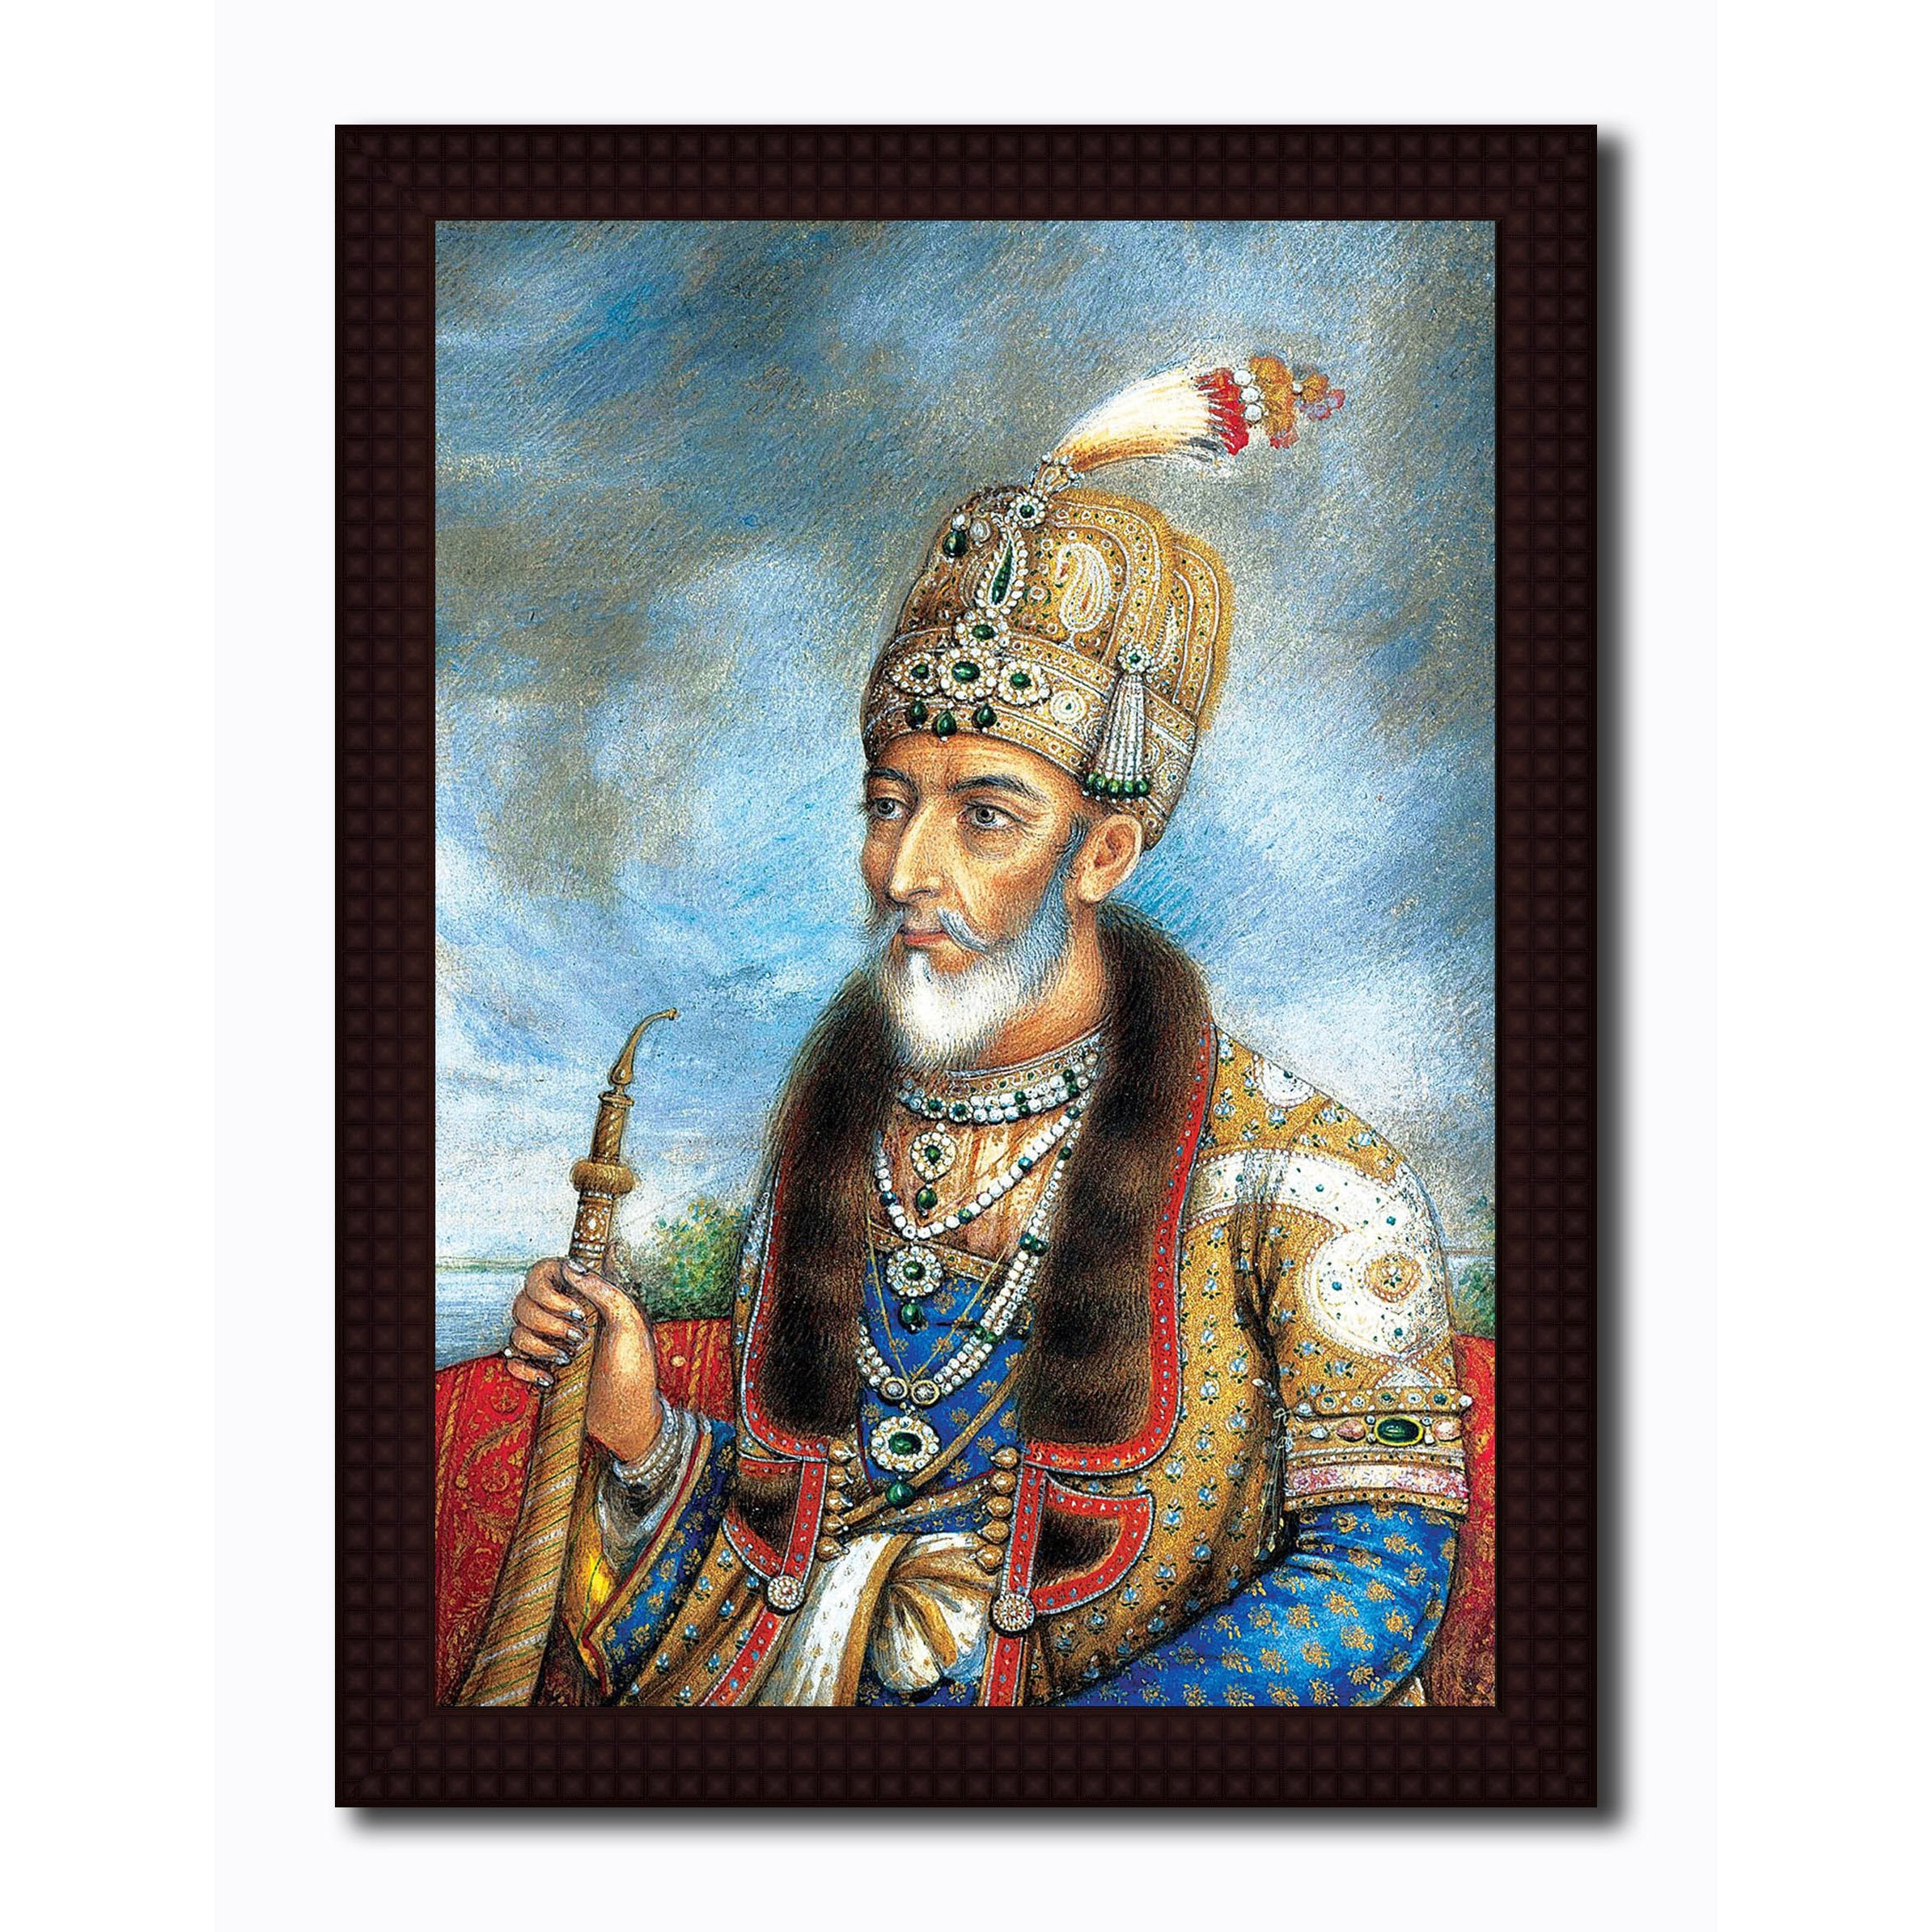 The Mughal King